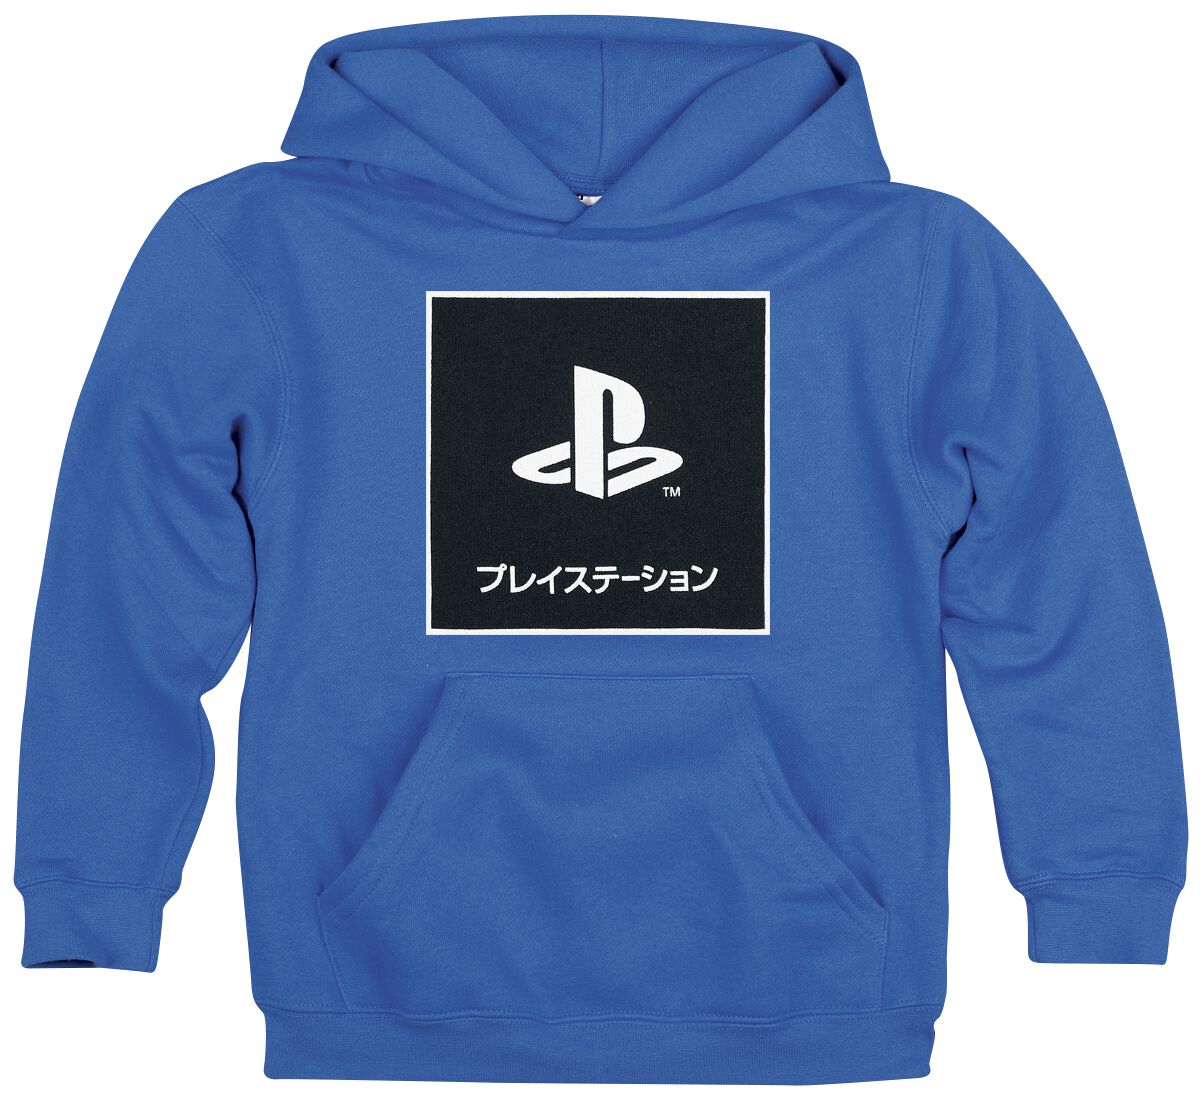 Playstation Kids - Katakana Logo Hooded sweater blue